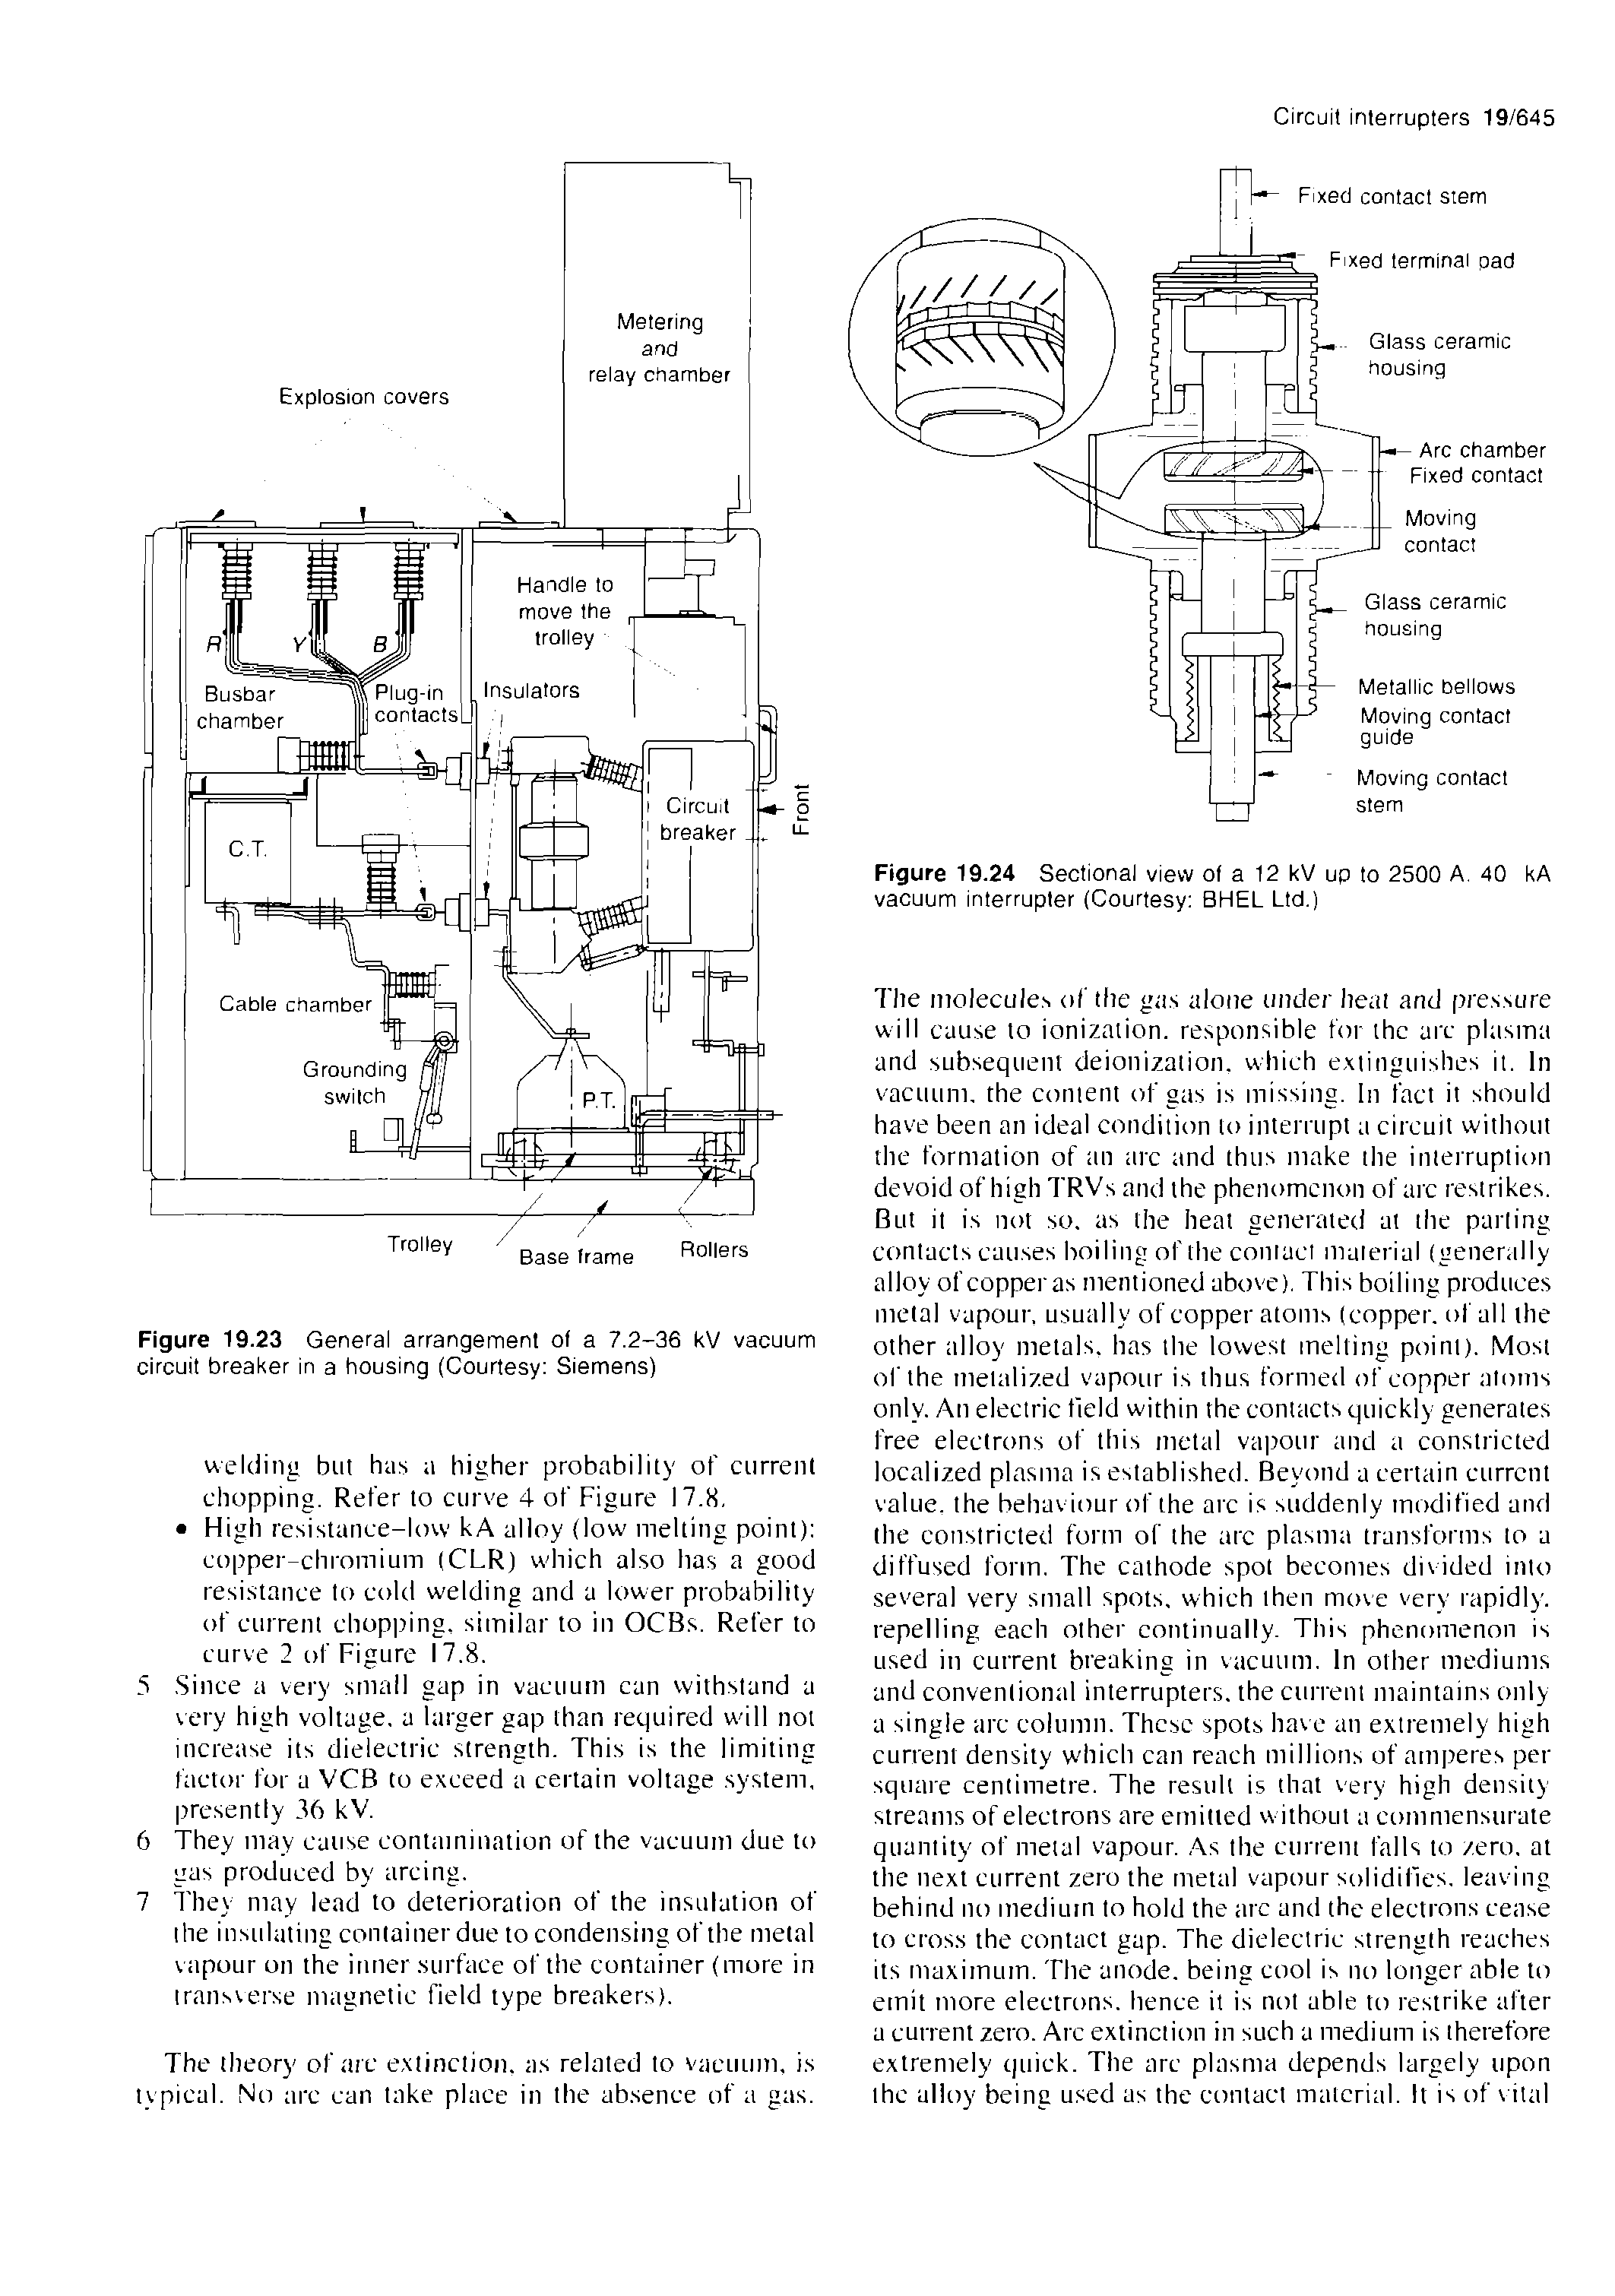 Figure 19.23 General arrangement of a 7.2-36 kV vacuum circuit breaker in a housing (Courtesy Siemens)...